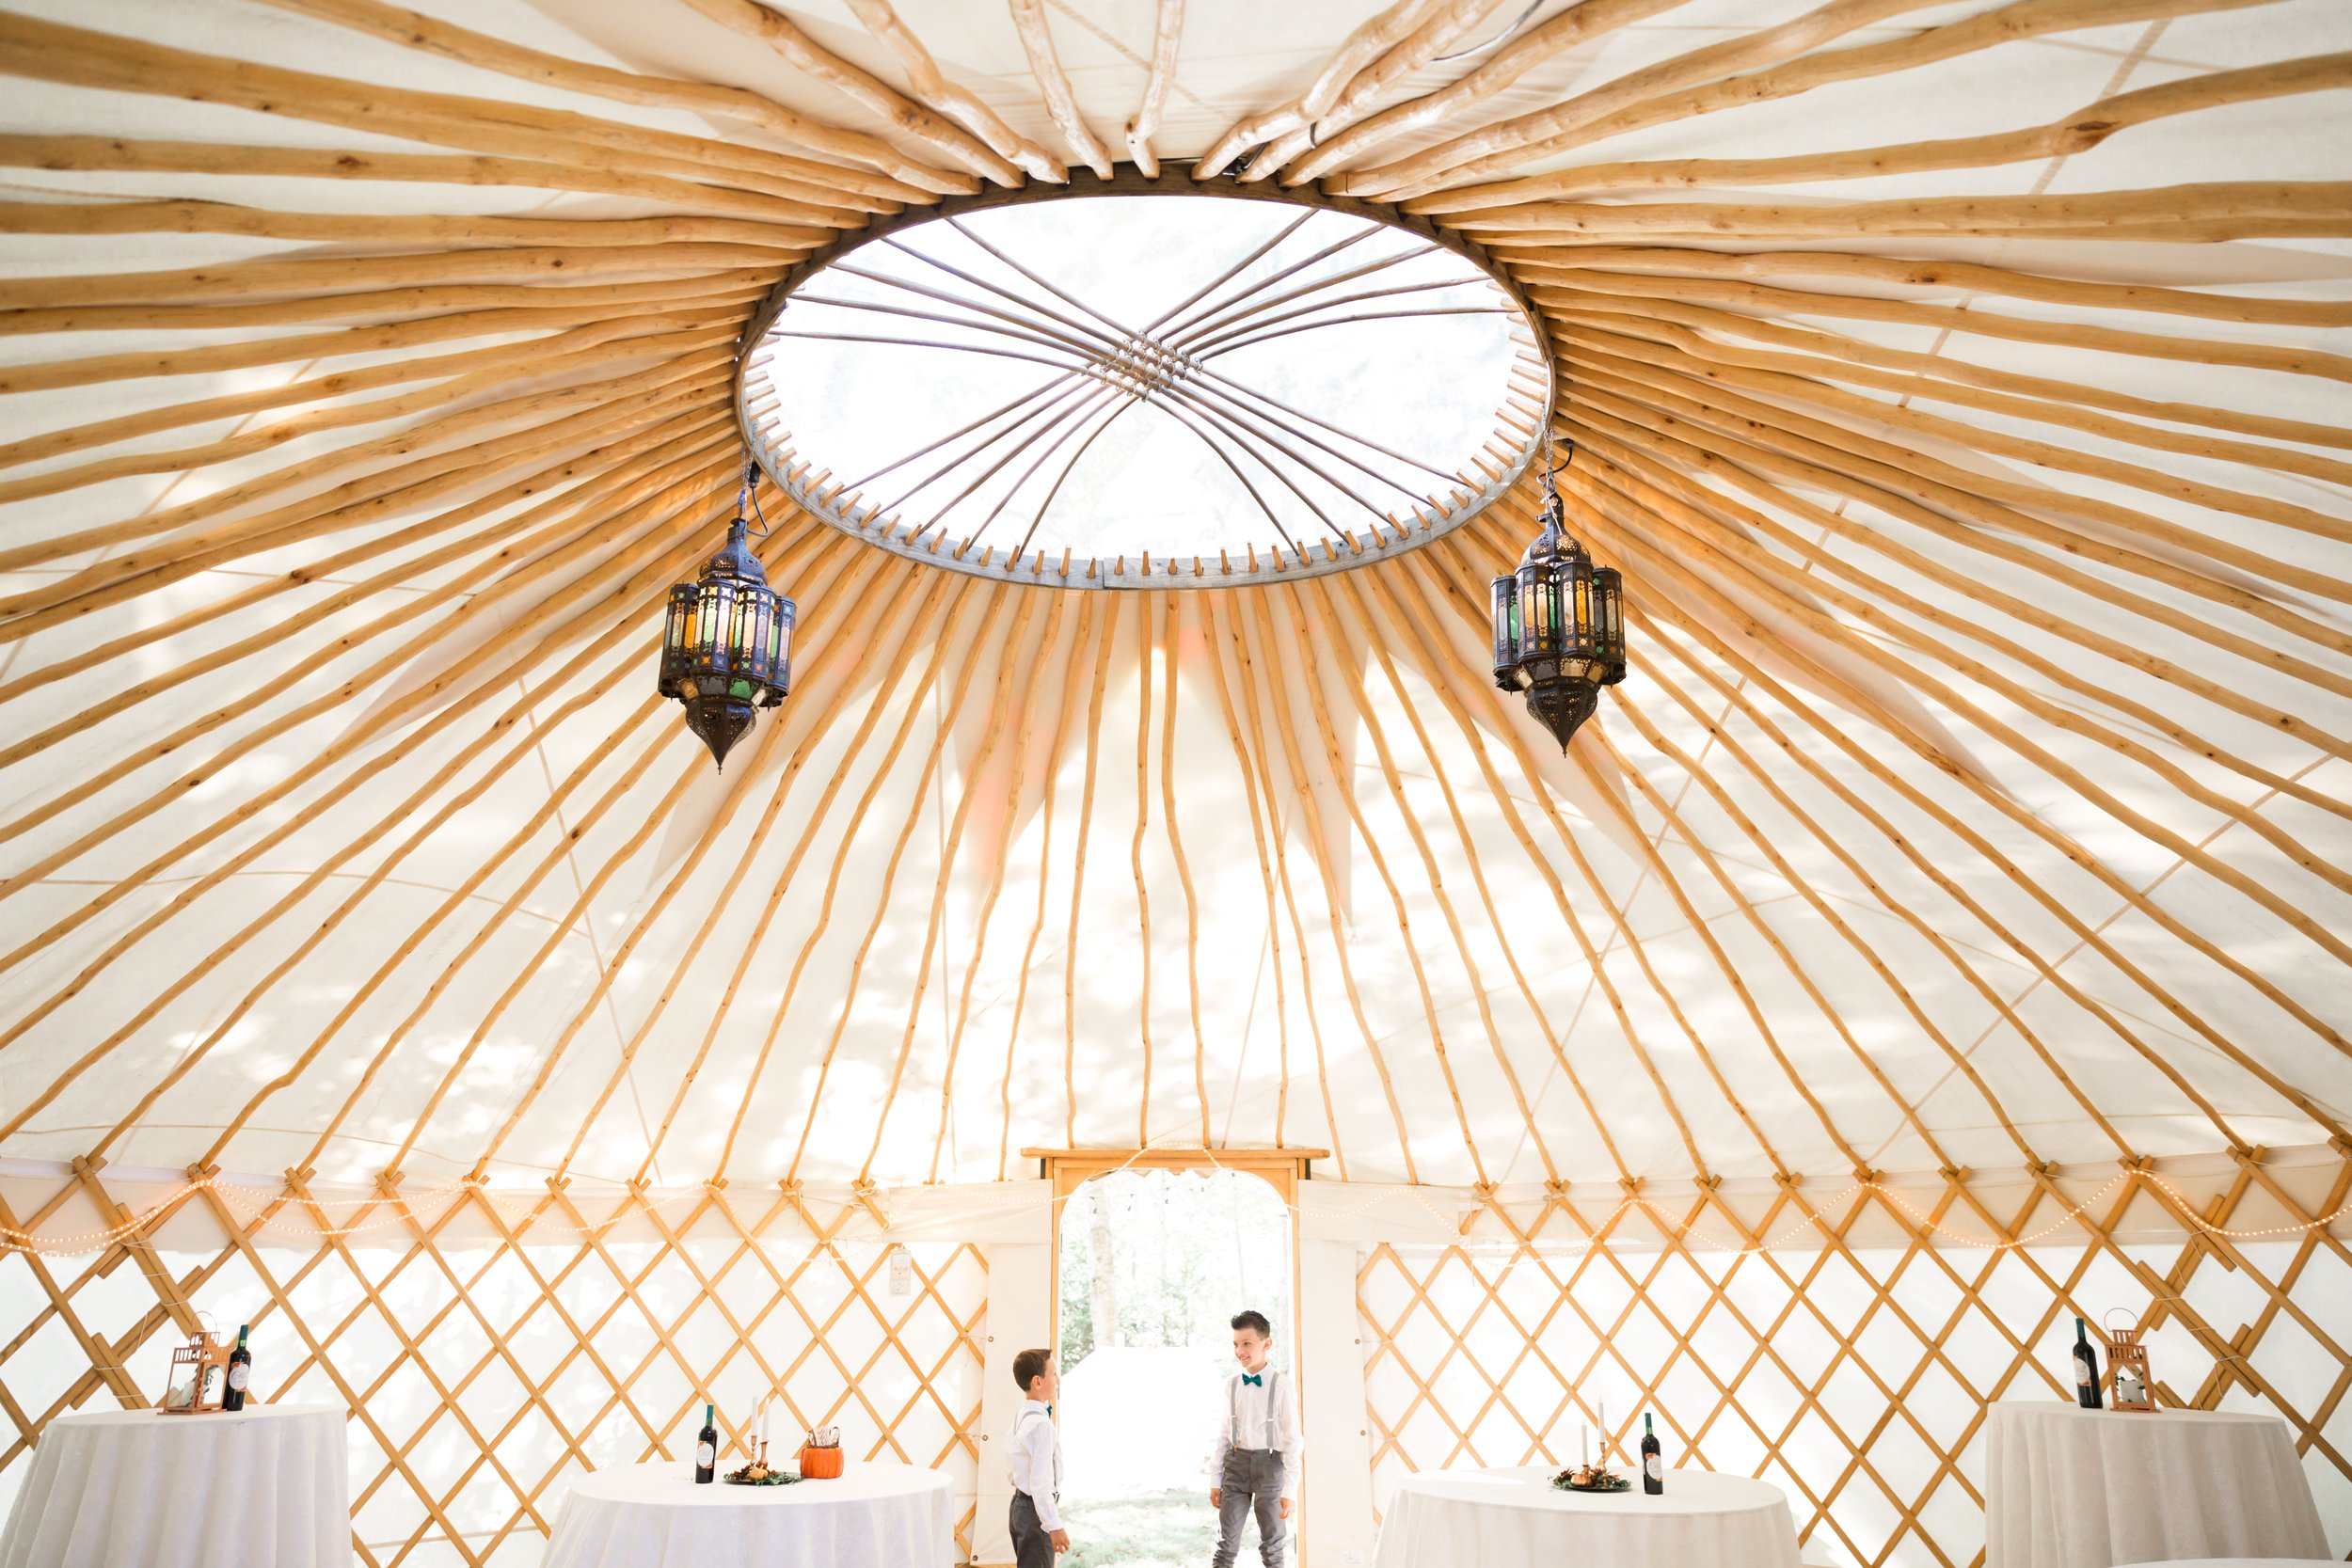 From simple stick to elegant wedding yurt!